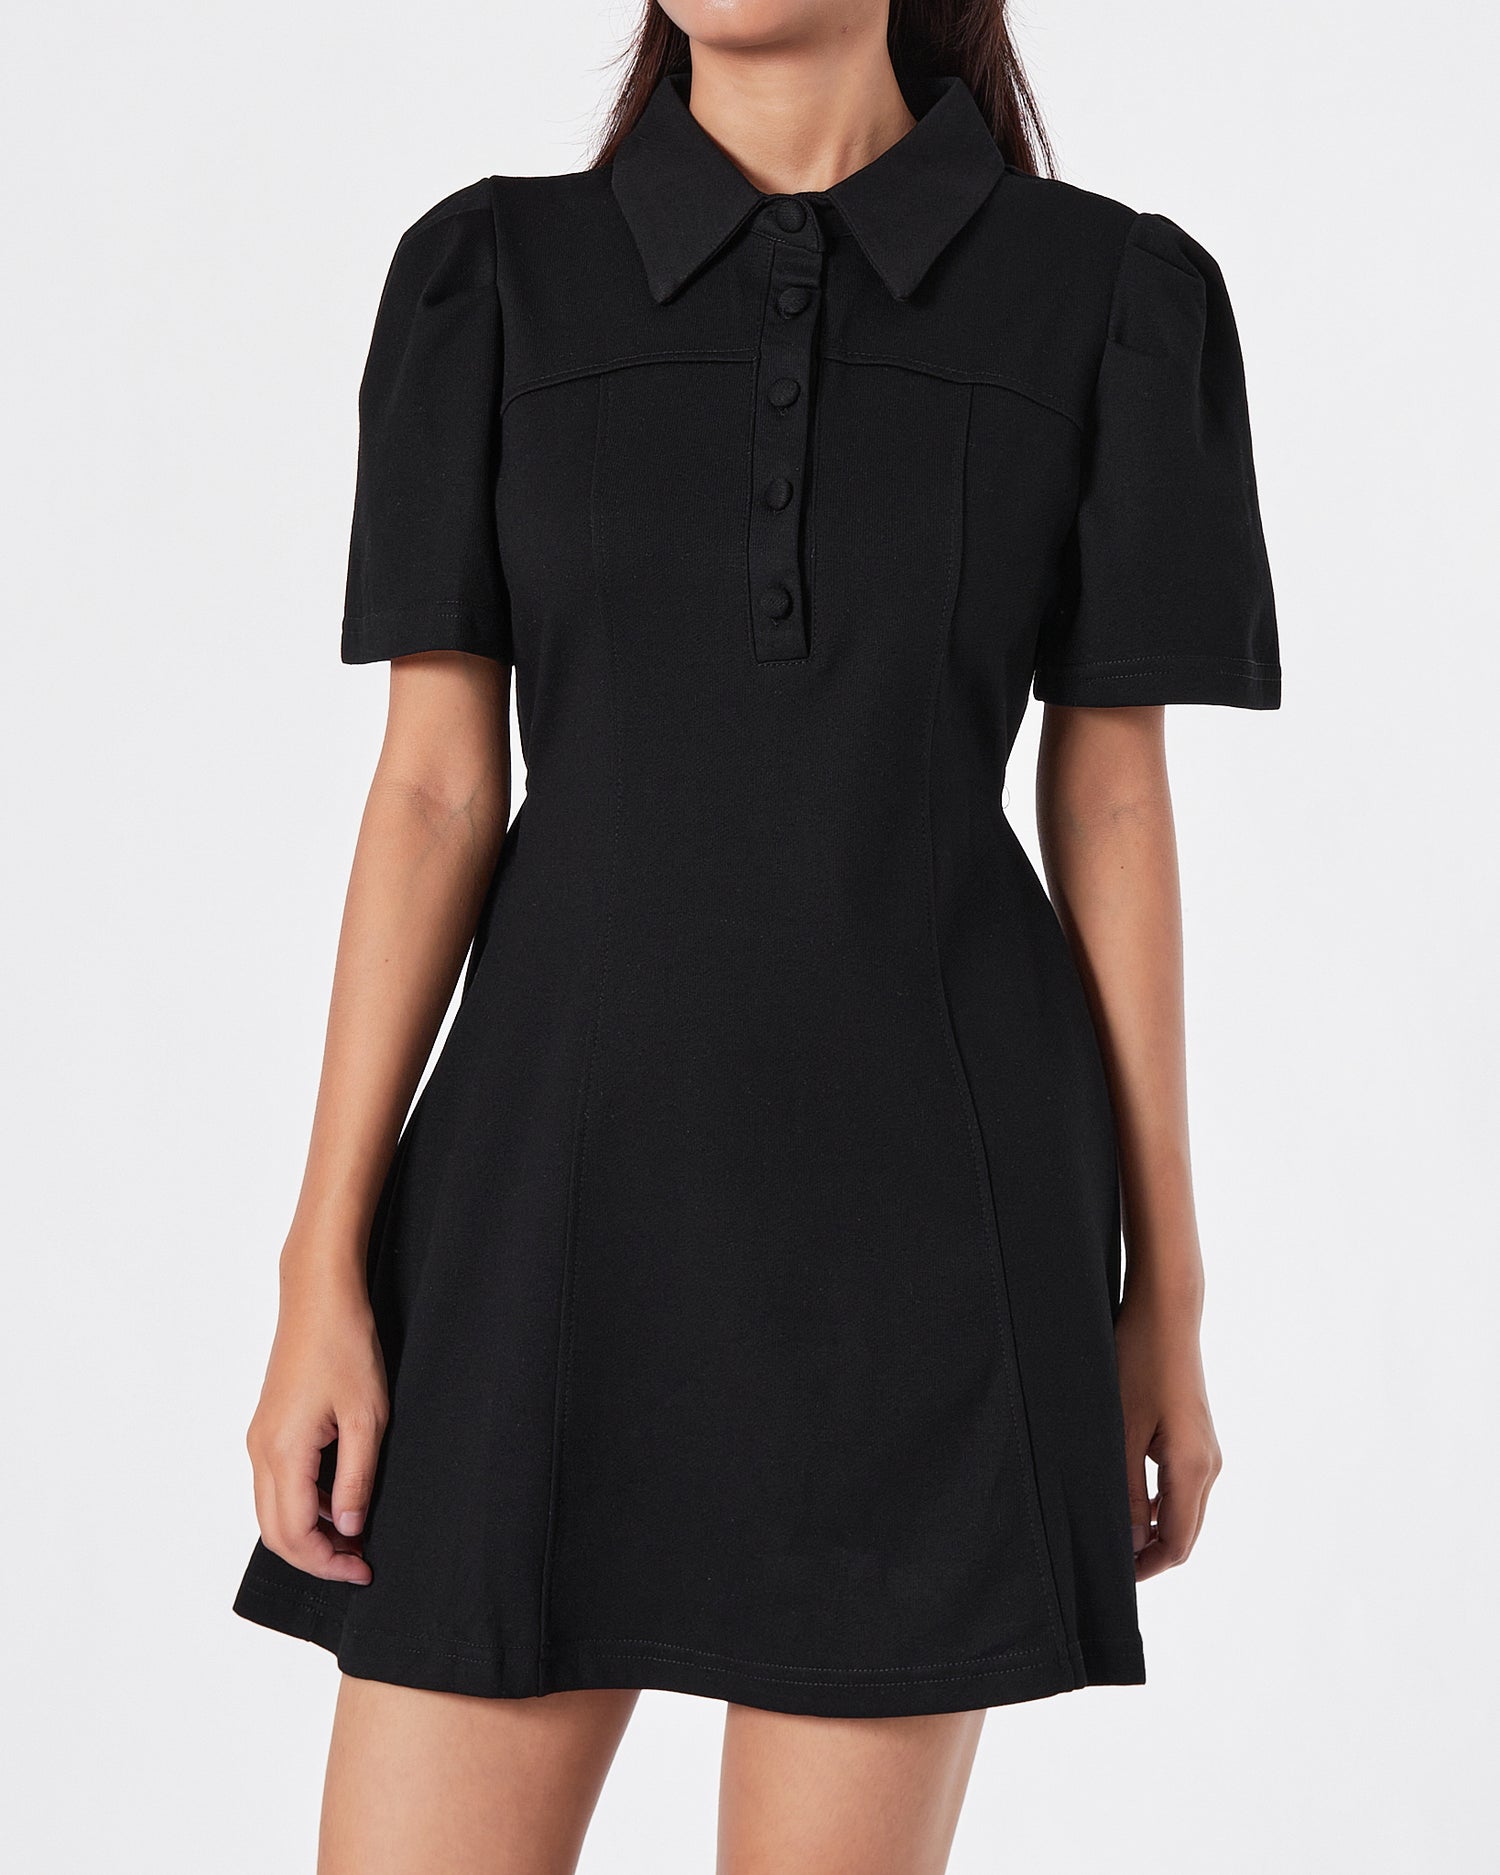 Lady Black  Polo Dress 18.50